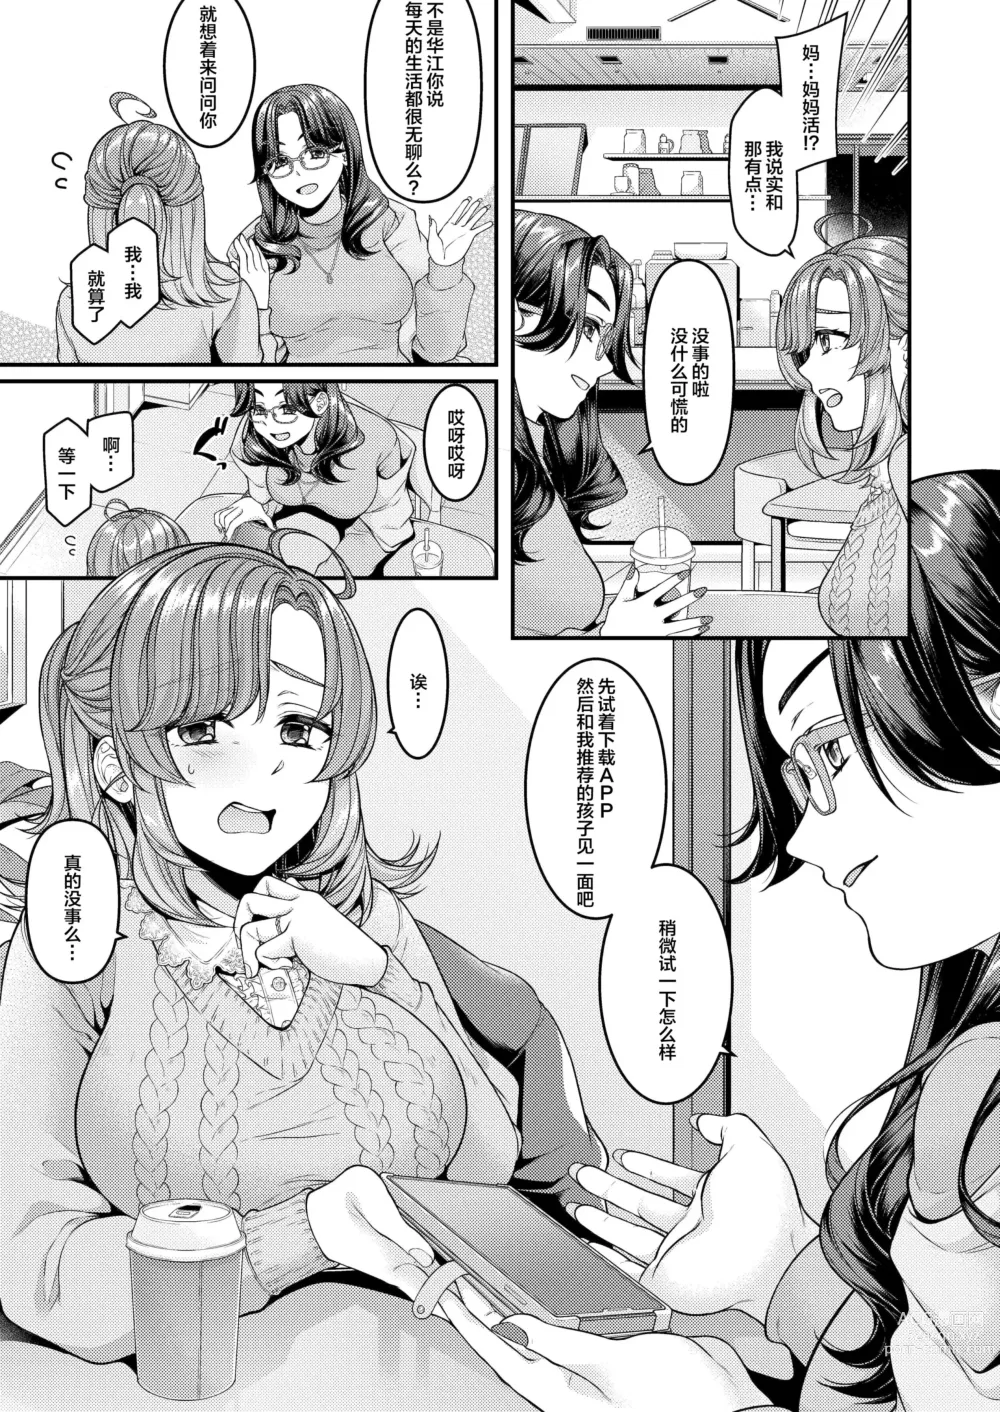 Page 2 of doujinshi Okaa-san, Mamakatsu ni Hamattemasu - Im addicted to feeling good with young guys.